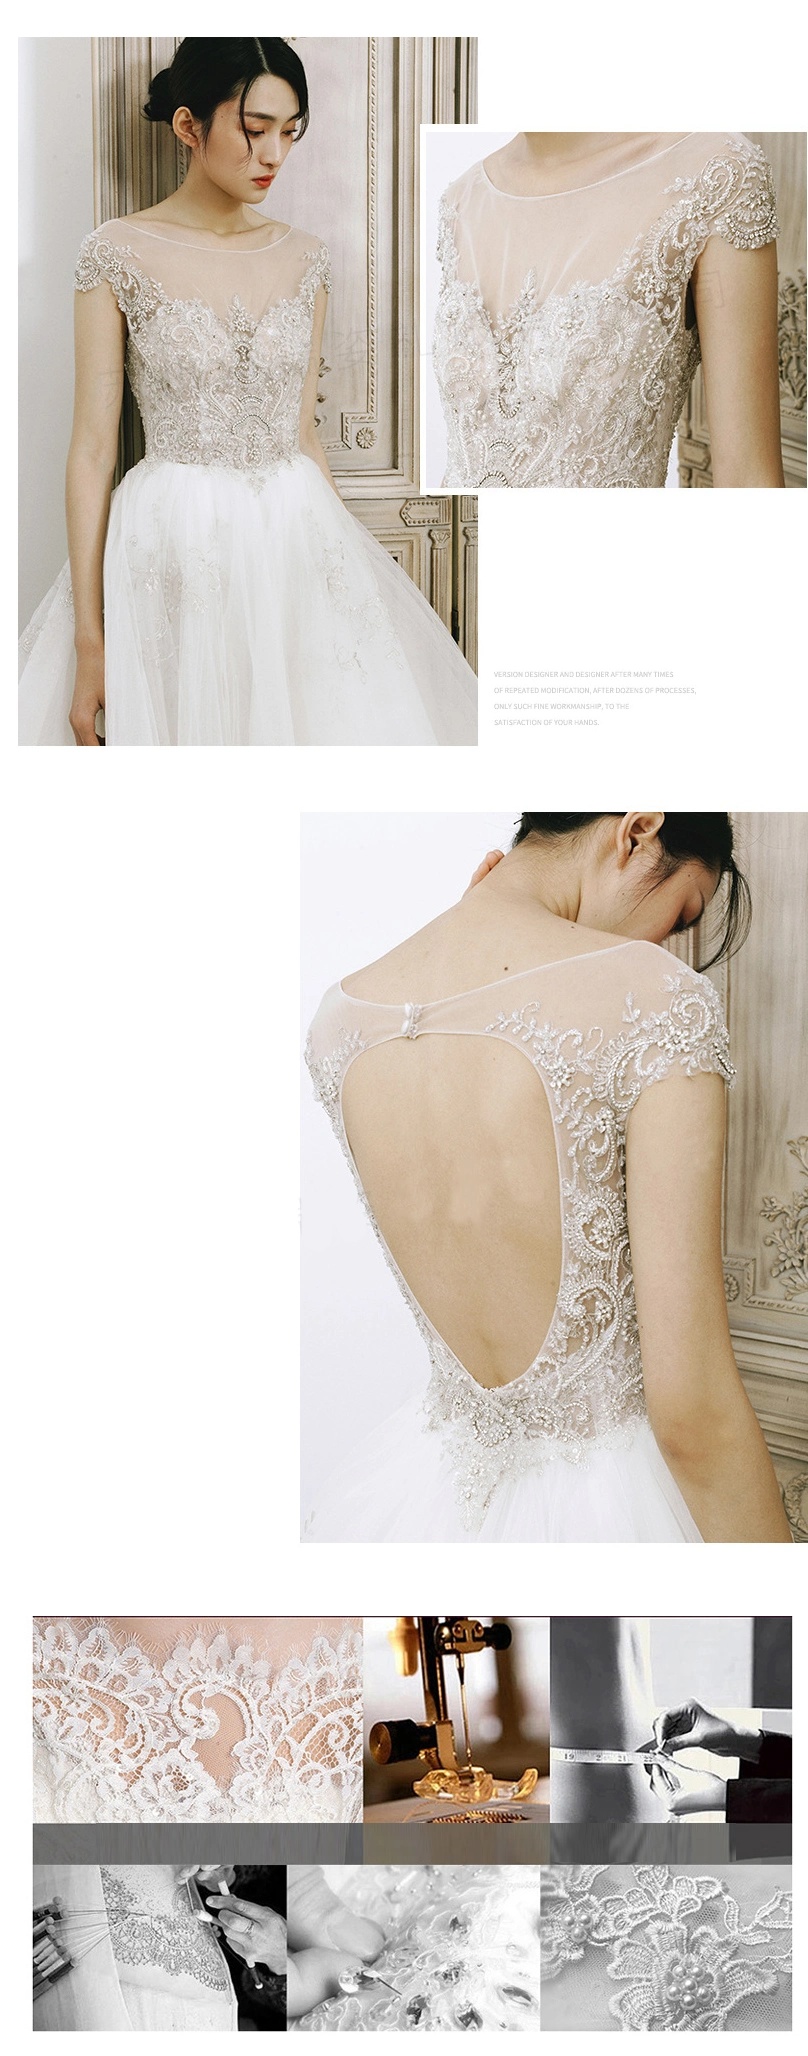 Supplier of Kinds of Fashion Dress, Wedding Dress, Evening Dress, Back Less Tailing Bridal Dress